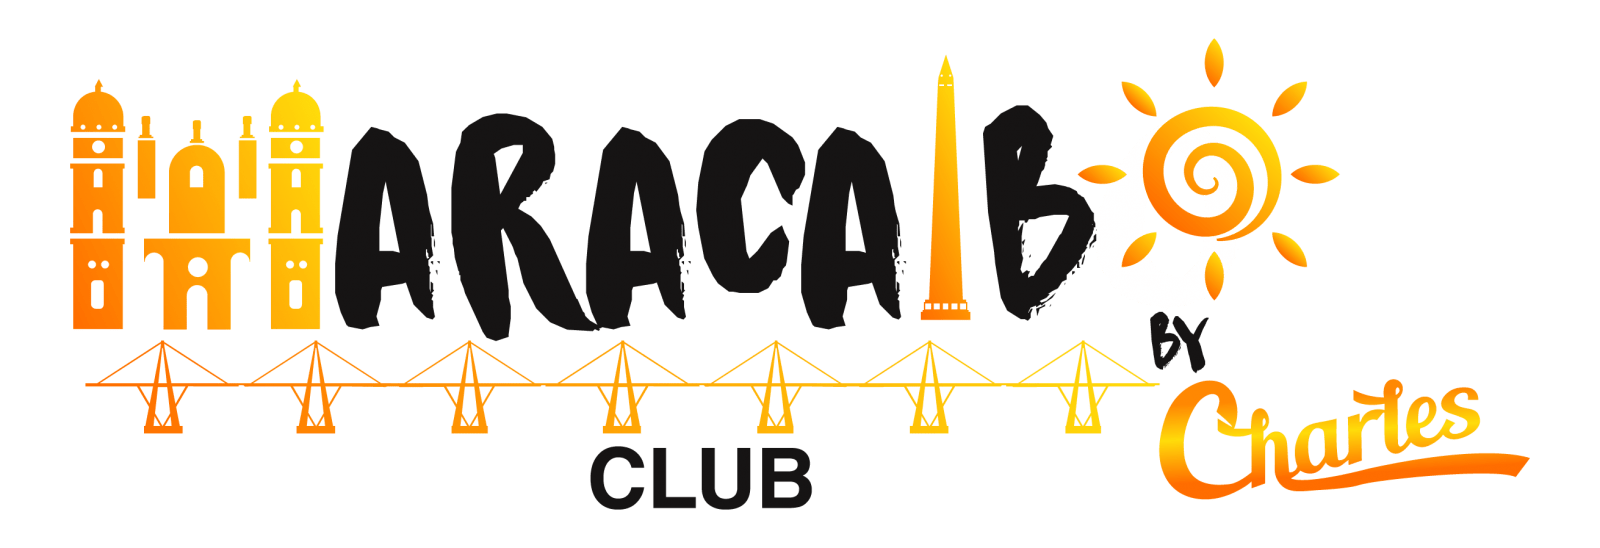 Maracaibo Club